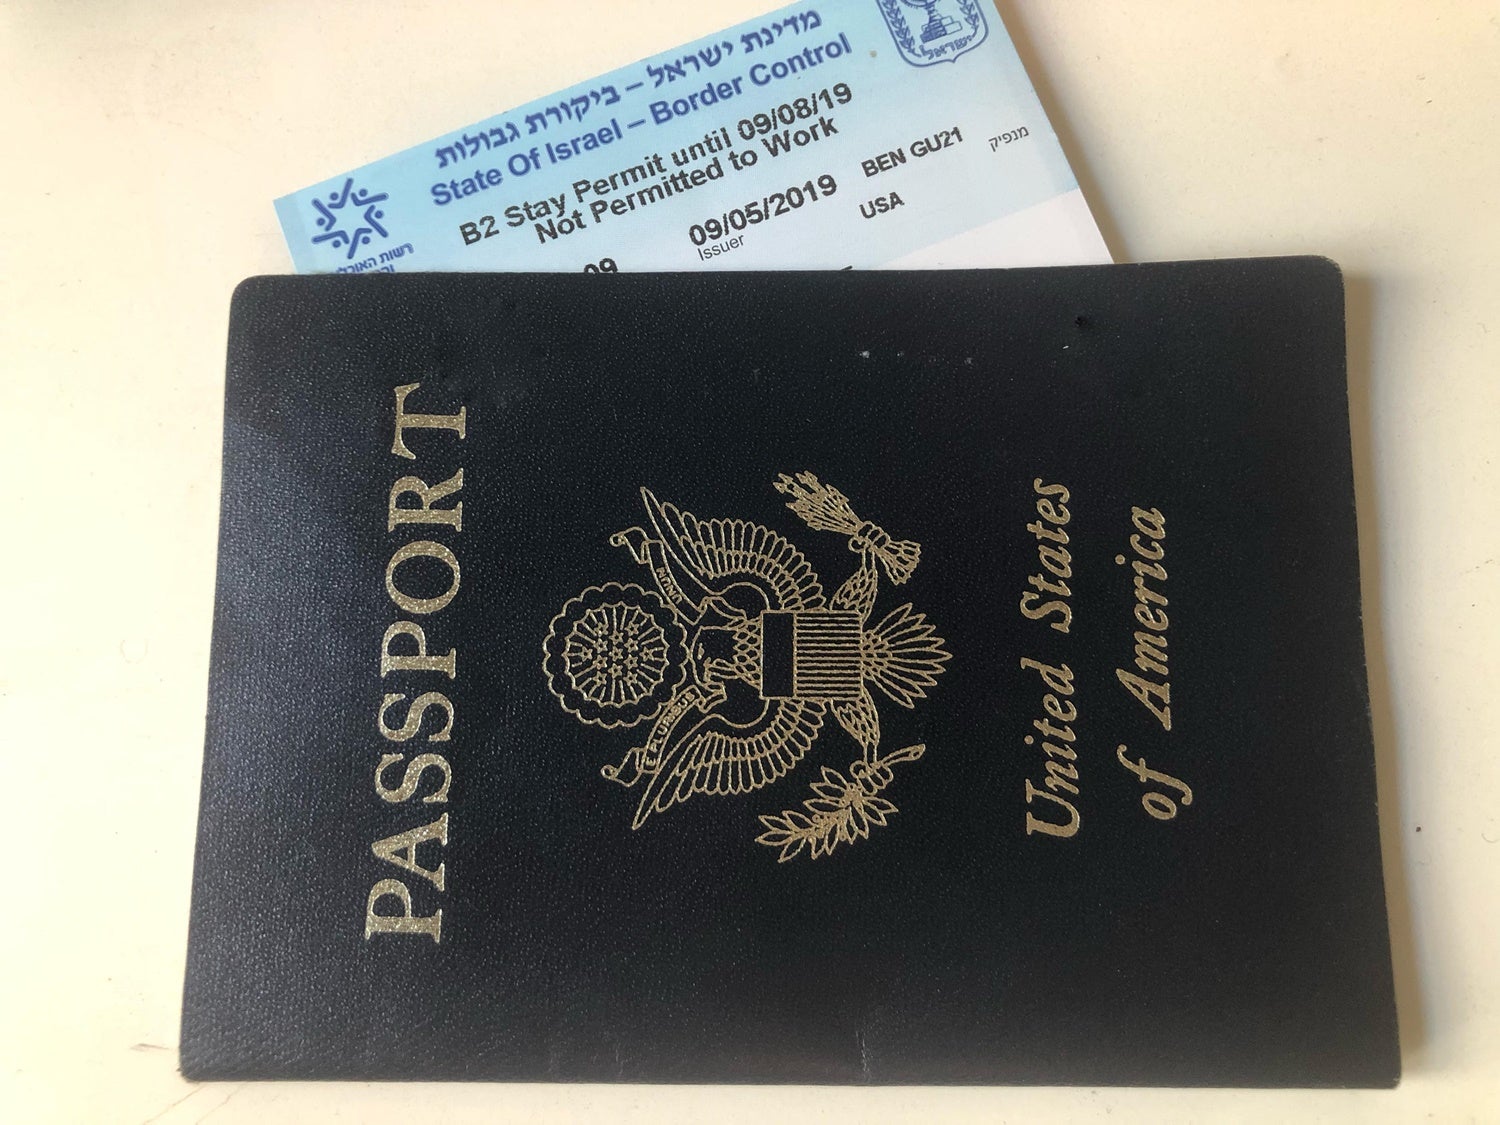 israel travel visa